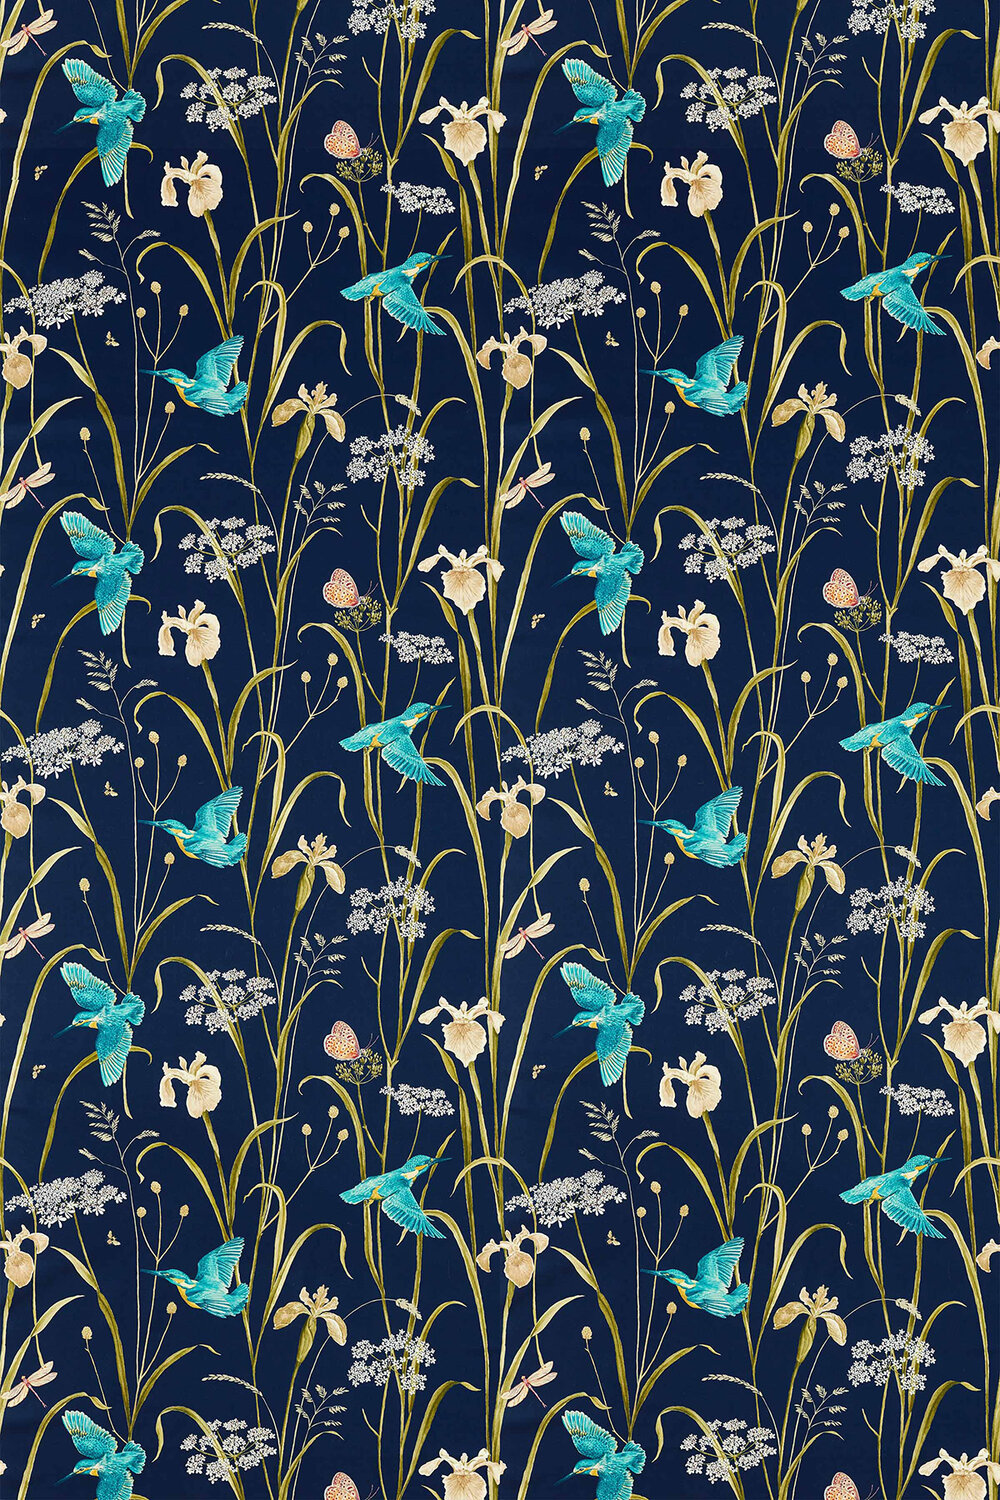 Kingfisher & Iris Fabric - Navy / Teal - by Sanderson